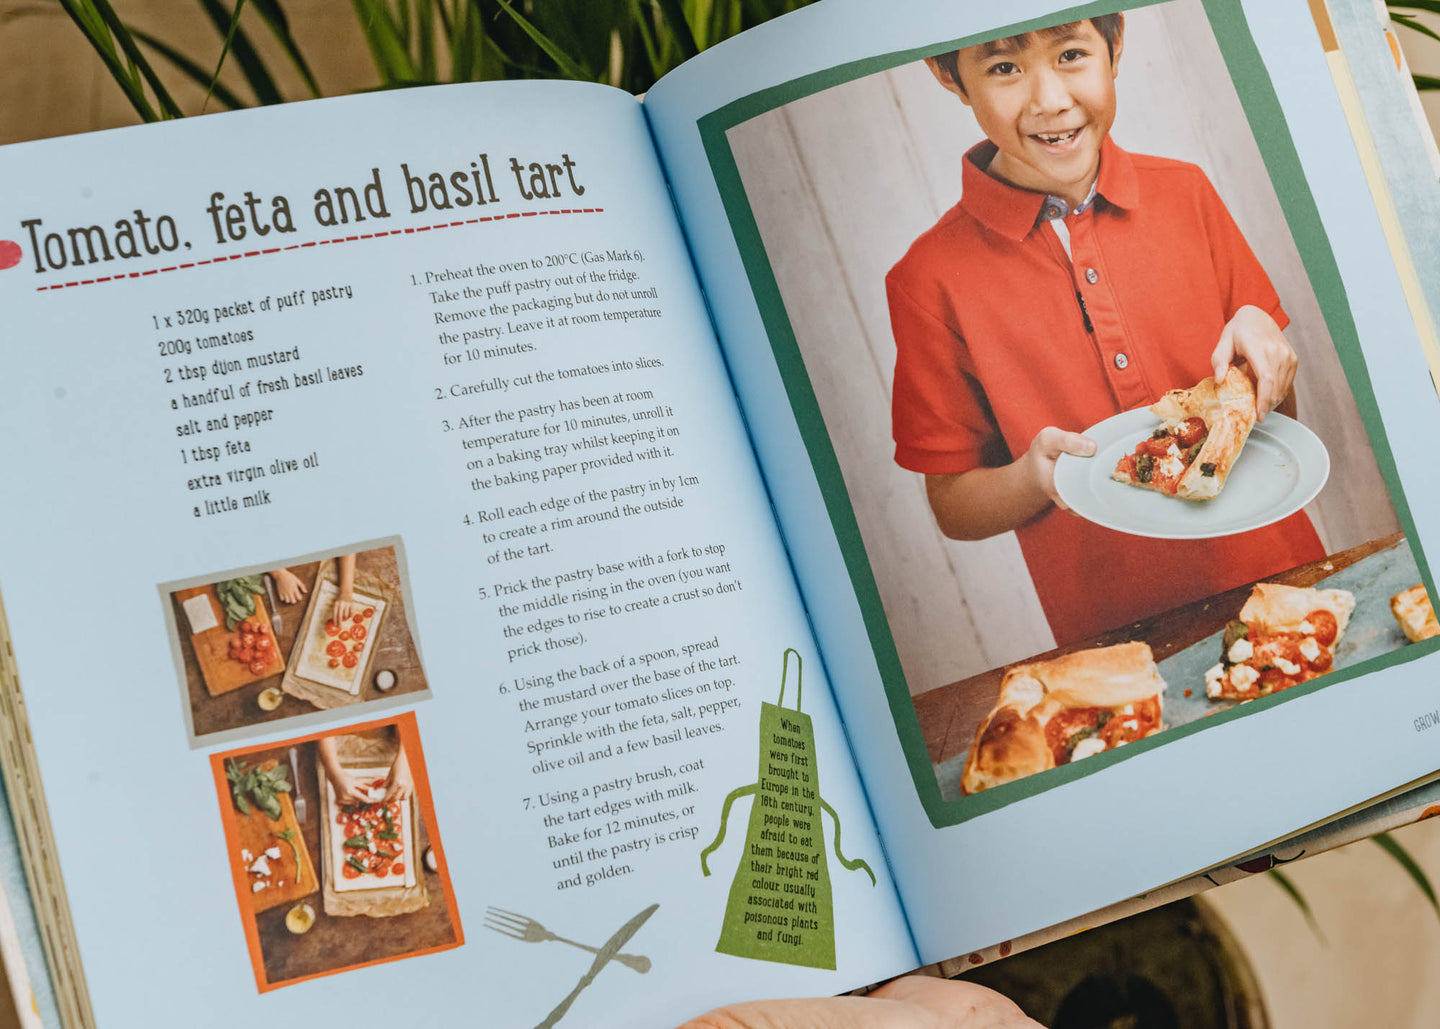 The Kew Gardens Children's Cookbook